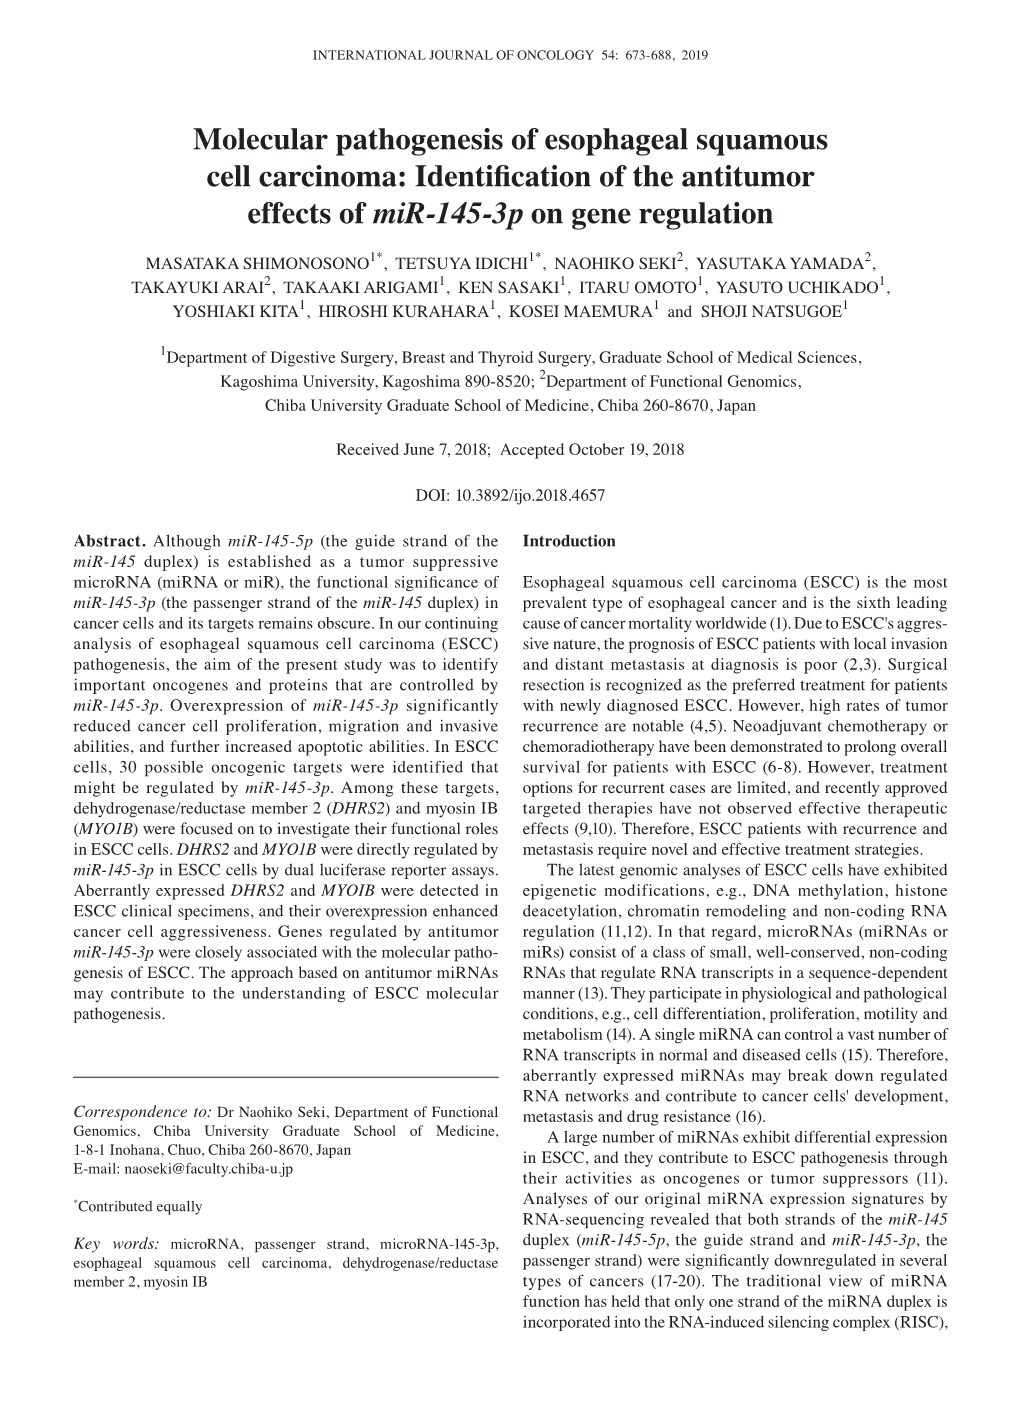 Identification of the Antitumor Effects of Mir‑145‑3P on Gene Regulation